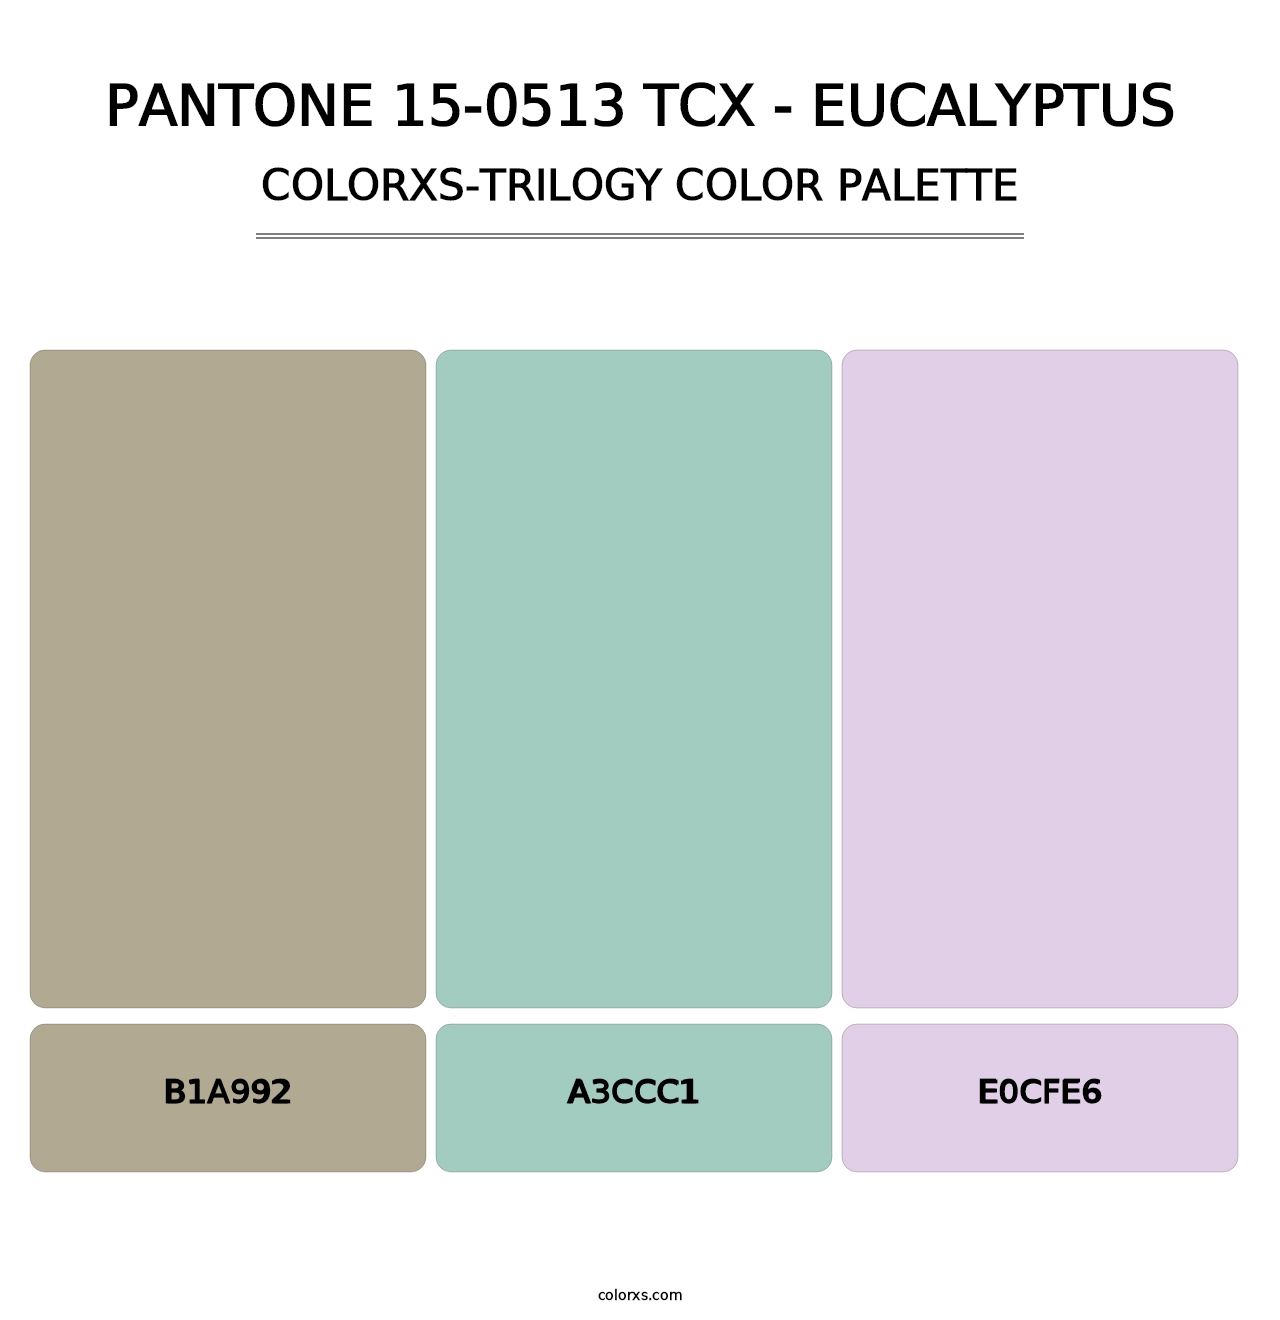 PANTONE 15-0513 TCX - Eucalyptus - Colorxs Trilogy Palette